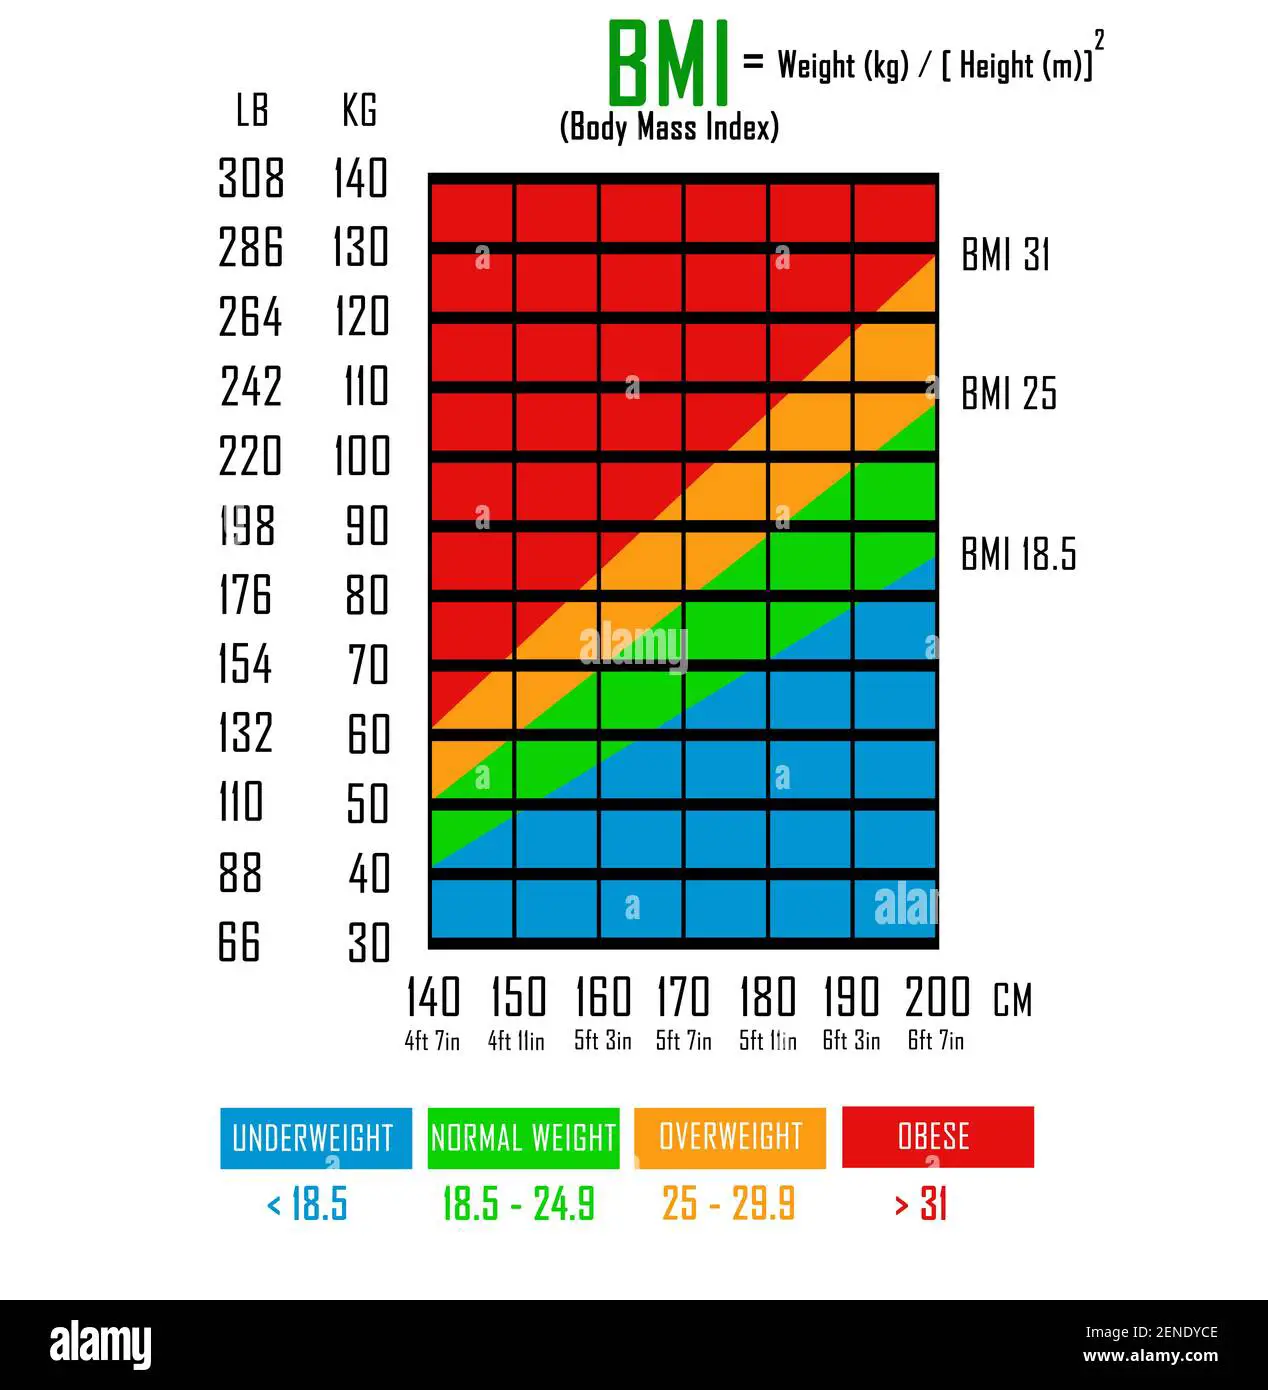 Healthy Bmi Chart